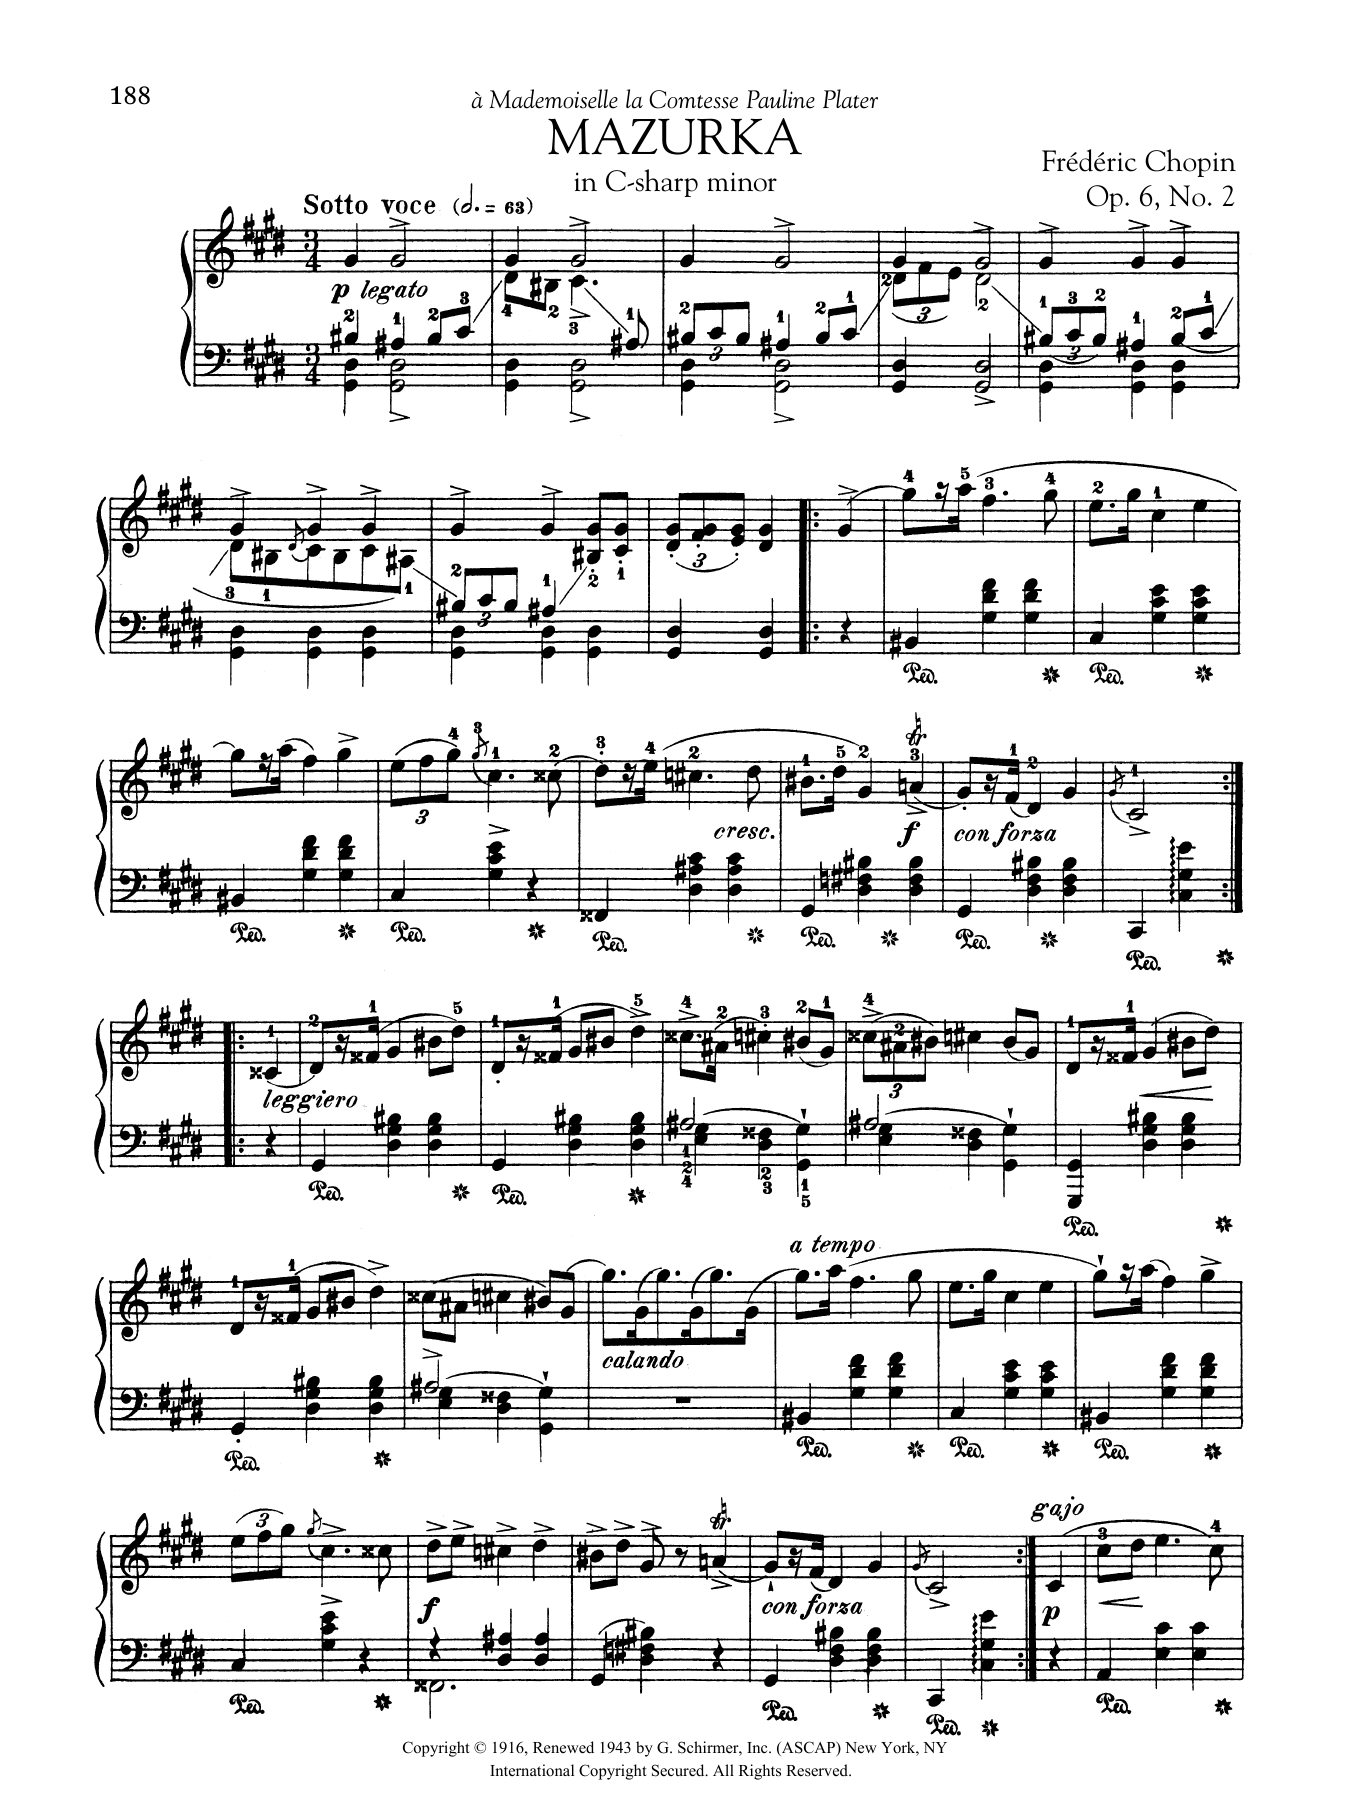 Download Frederic Chopin Mazurka in C-sharp minor, Op. 6, No. 2 Sheet Music